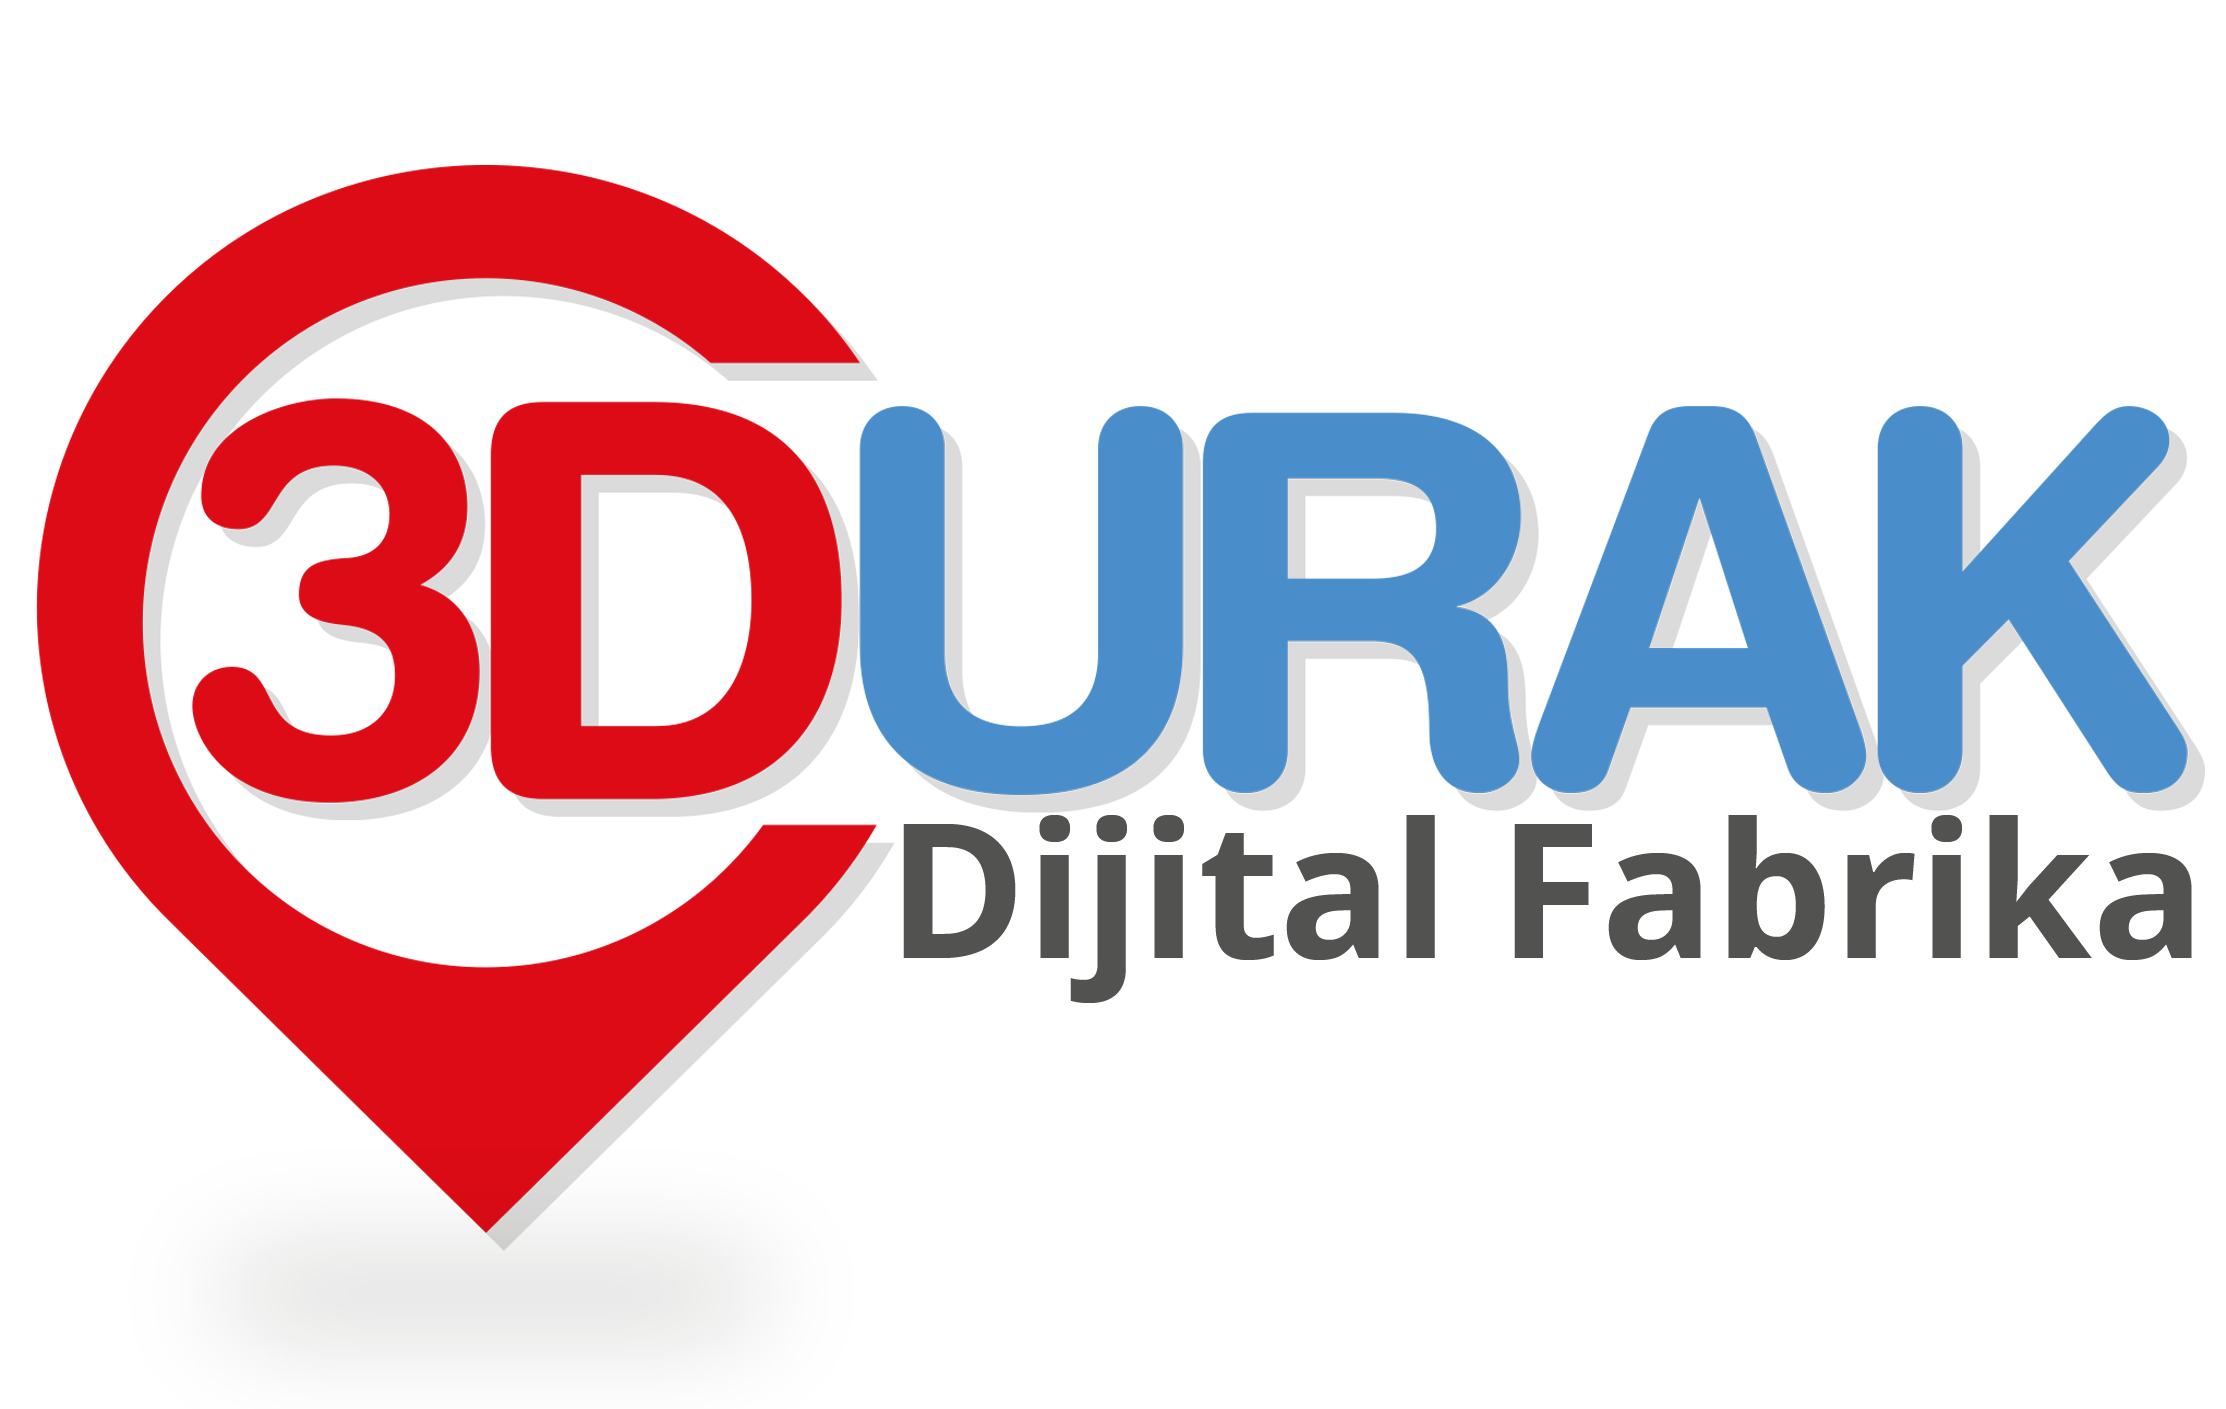 3durak_logo